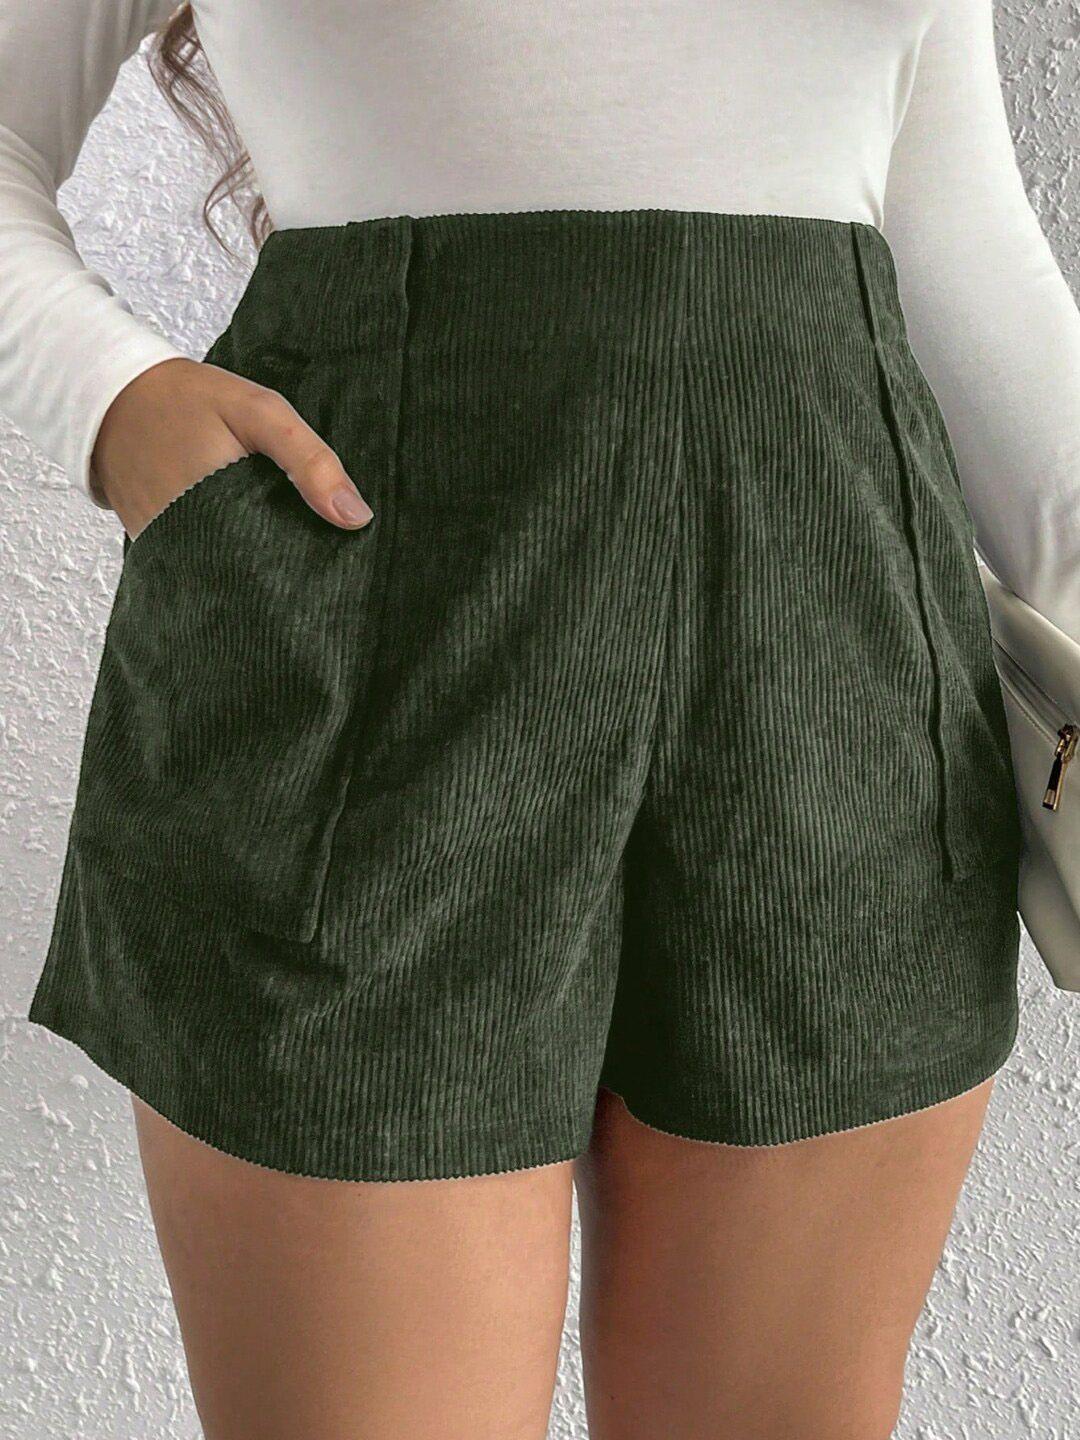 stylecast x kpop green women mid-rise striped shorts